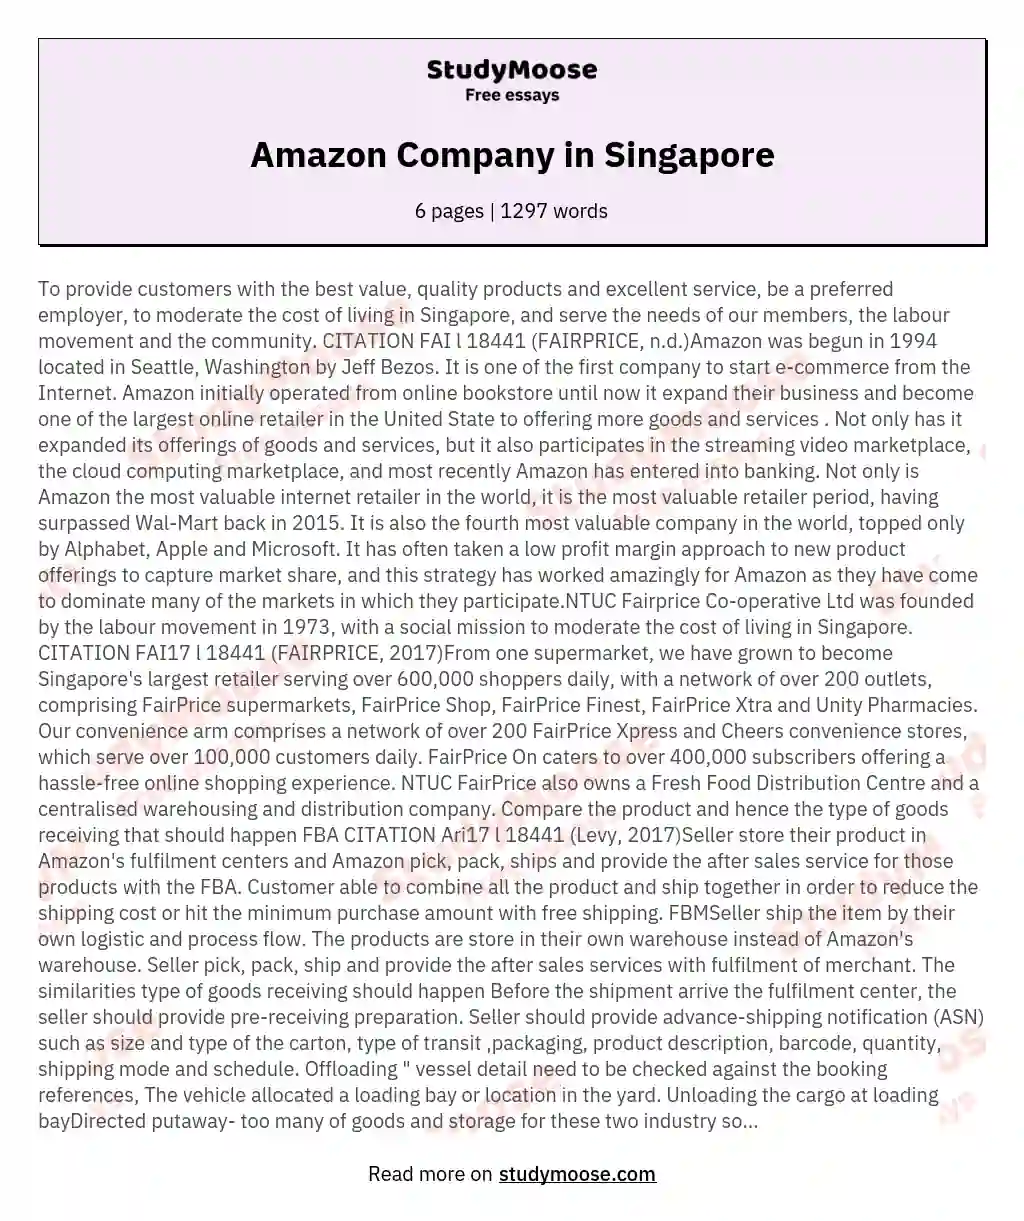 Amazon Company in Singapore essay